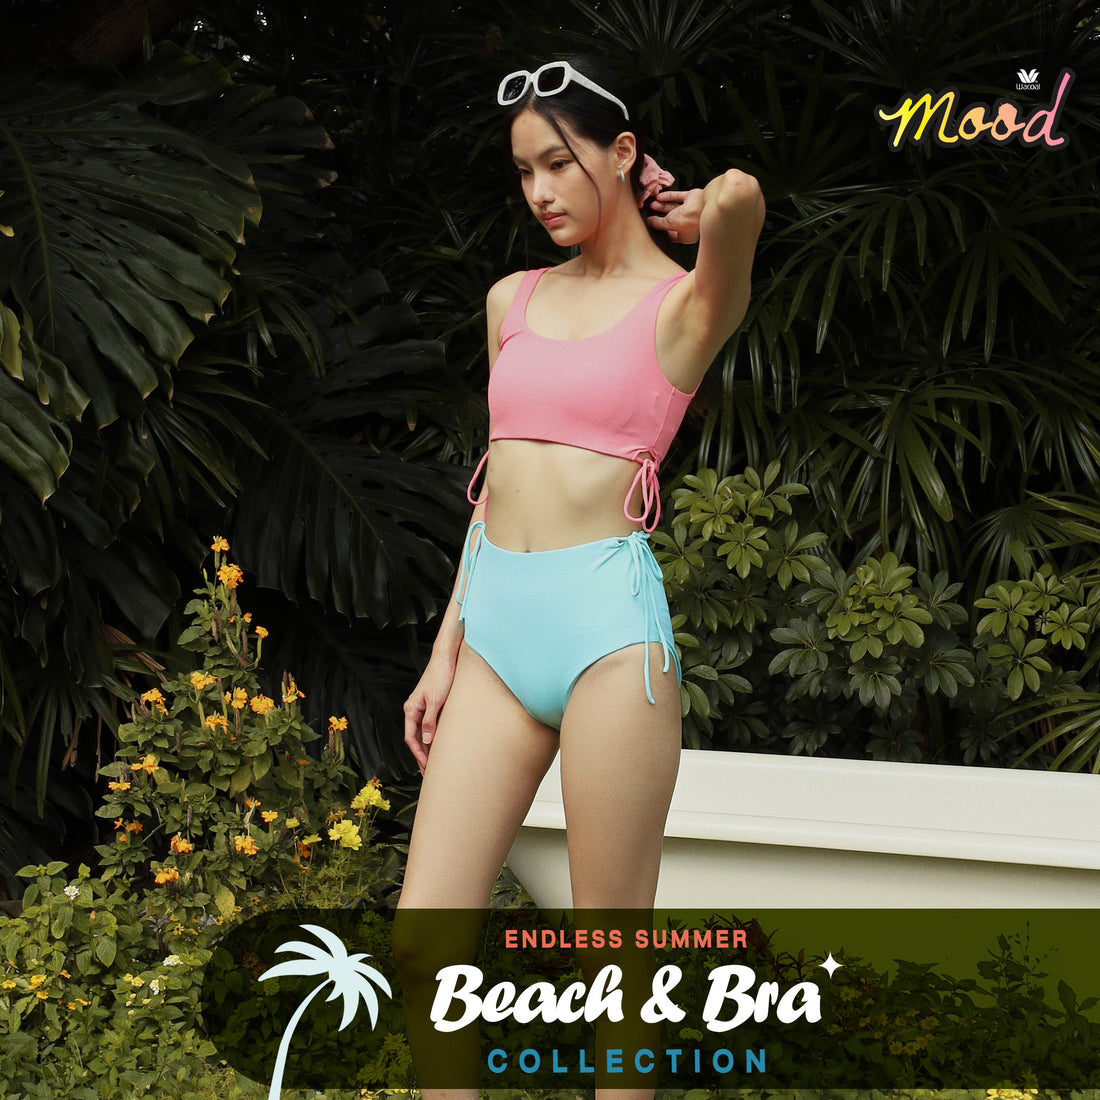 Wacoal Mood Set Beach & Bra เซ็ทชุดว่ายน้ำ (เสื้อและกางเกง) รุ่น MM1U03 + MM6U03 สีชมพู-มินต์ (SP-LT)